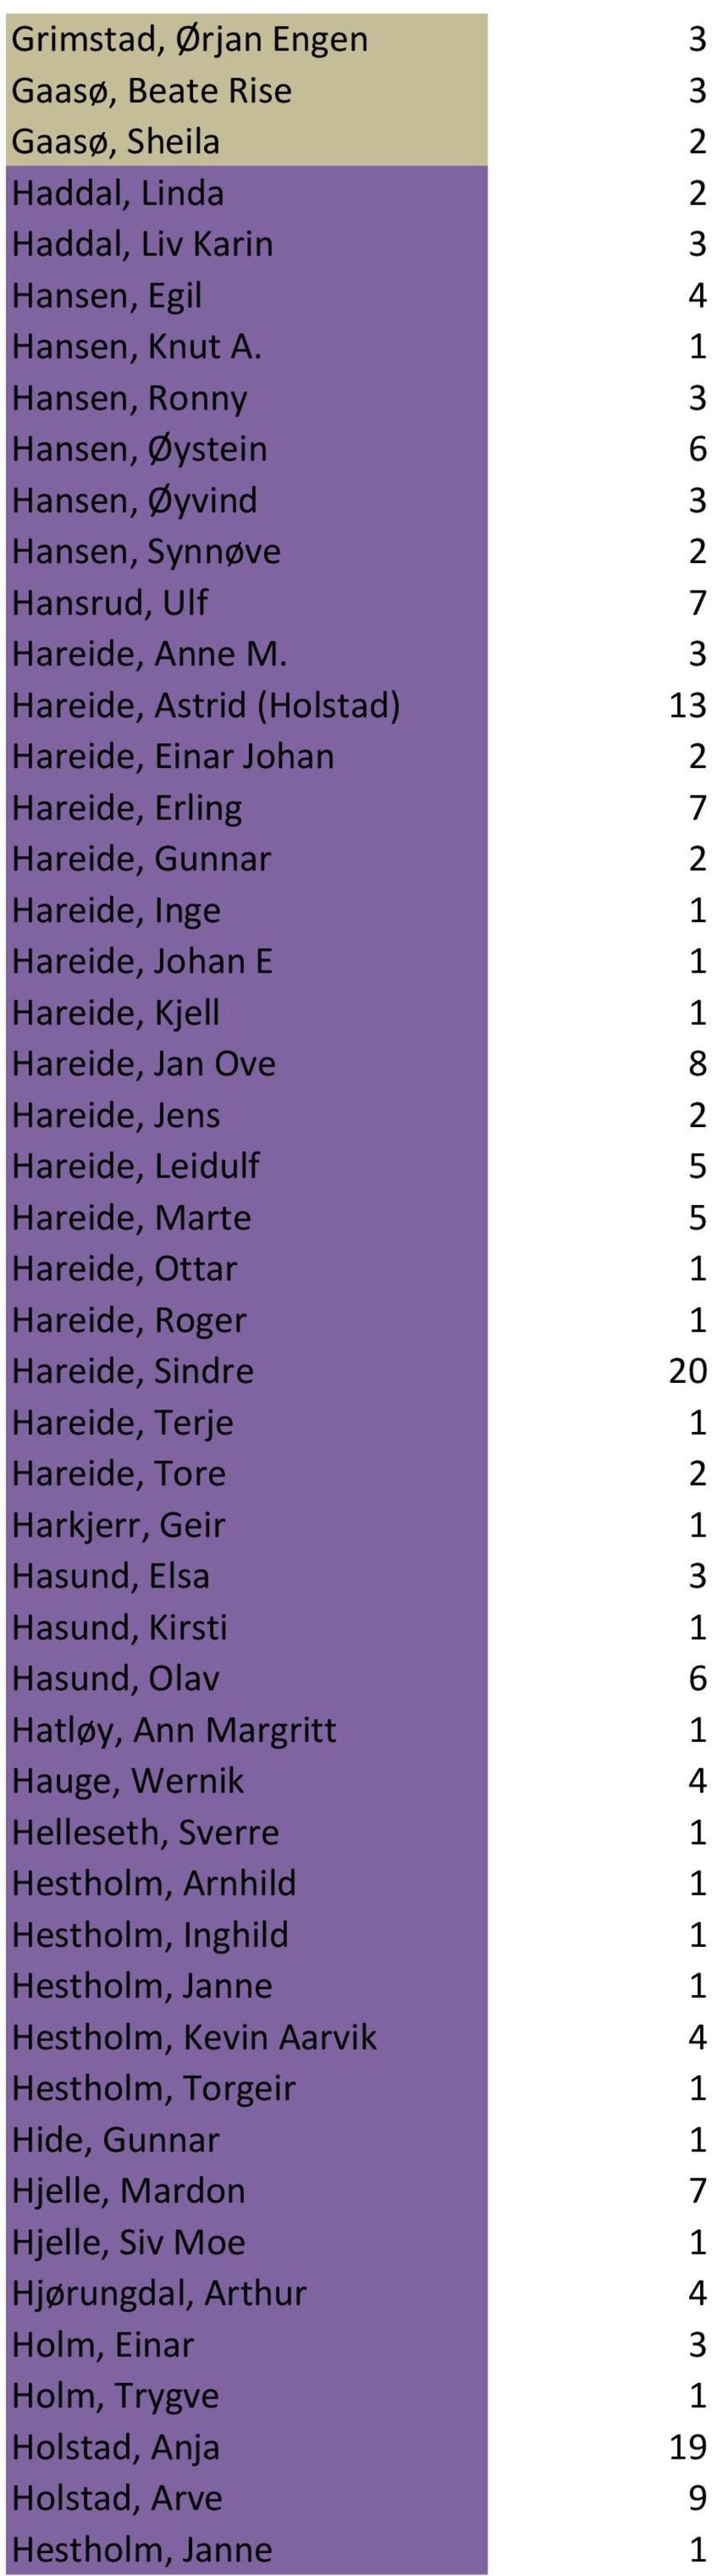 3 Hareide, Astrid (Holstad) 13 Hareide, Einar Johan 2 Hareide, Erling 7 Hareide, Gunnar 2 Hareide, Inge 1 Hareide, Johan E 1 Hareide, Kjell 1 Hareide, Jan Ove 8 Hareide, Jens 2 Hareide, Leidulf 5